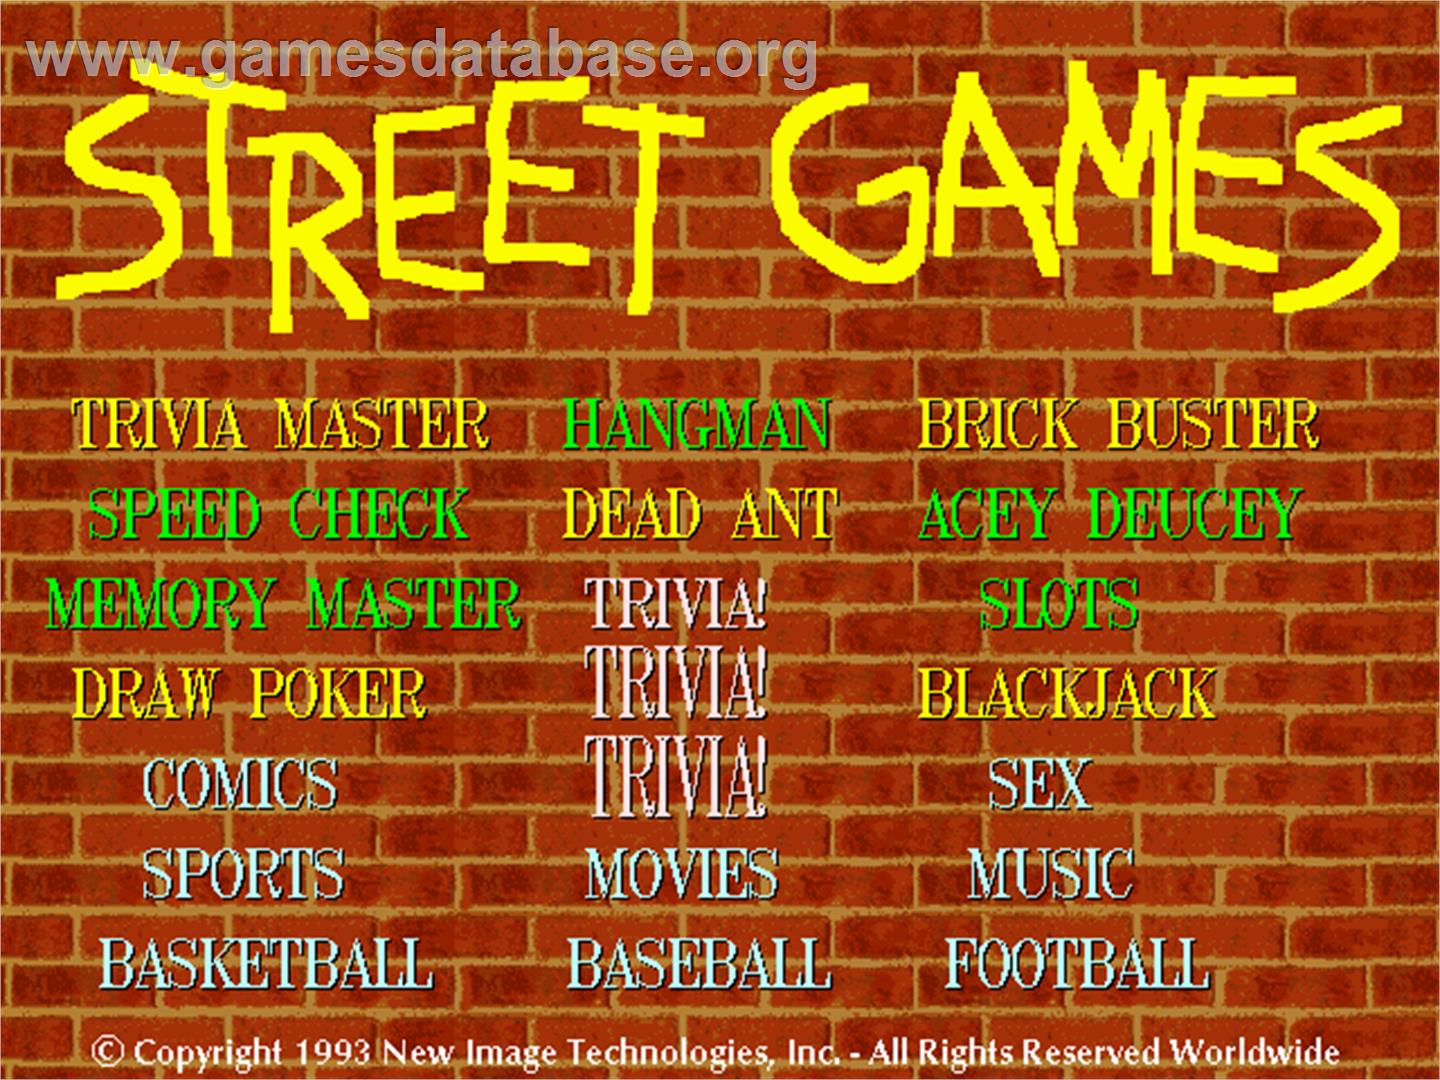 Street Games II - Arcade - Artwork - Title Screen